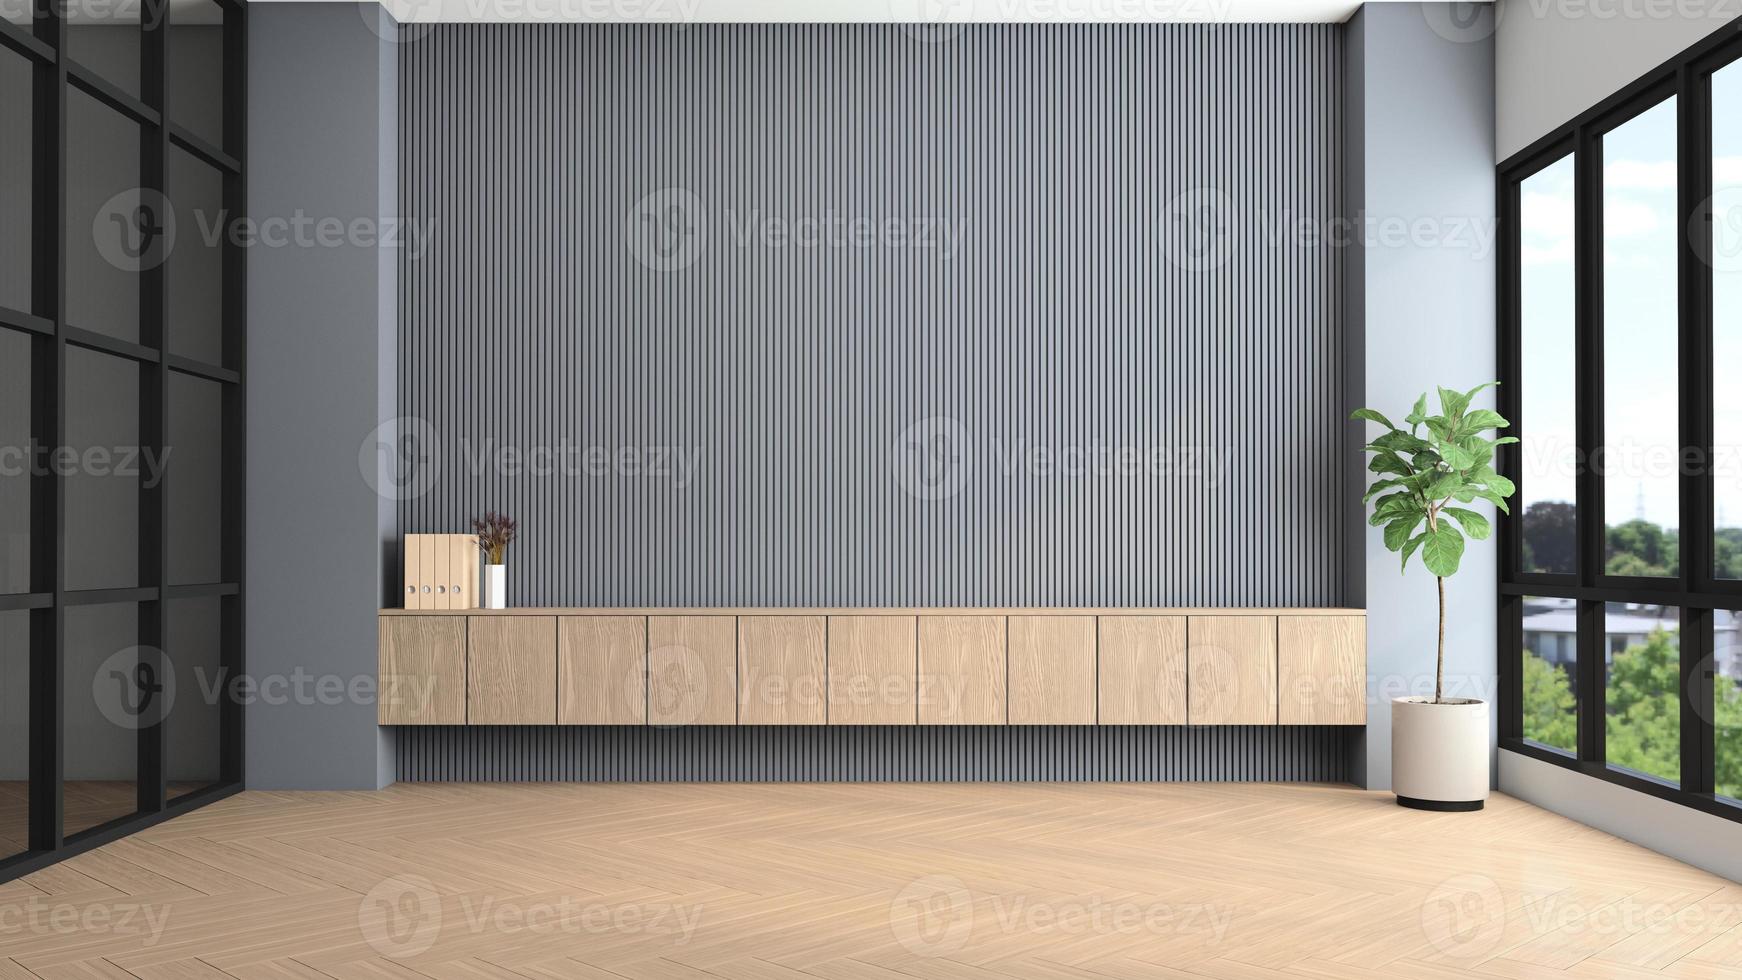 moderne lege kamer met grijze lamellenwand en ingebouwde houten kast. 3D-rendering foto